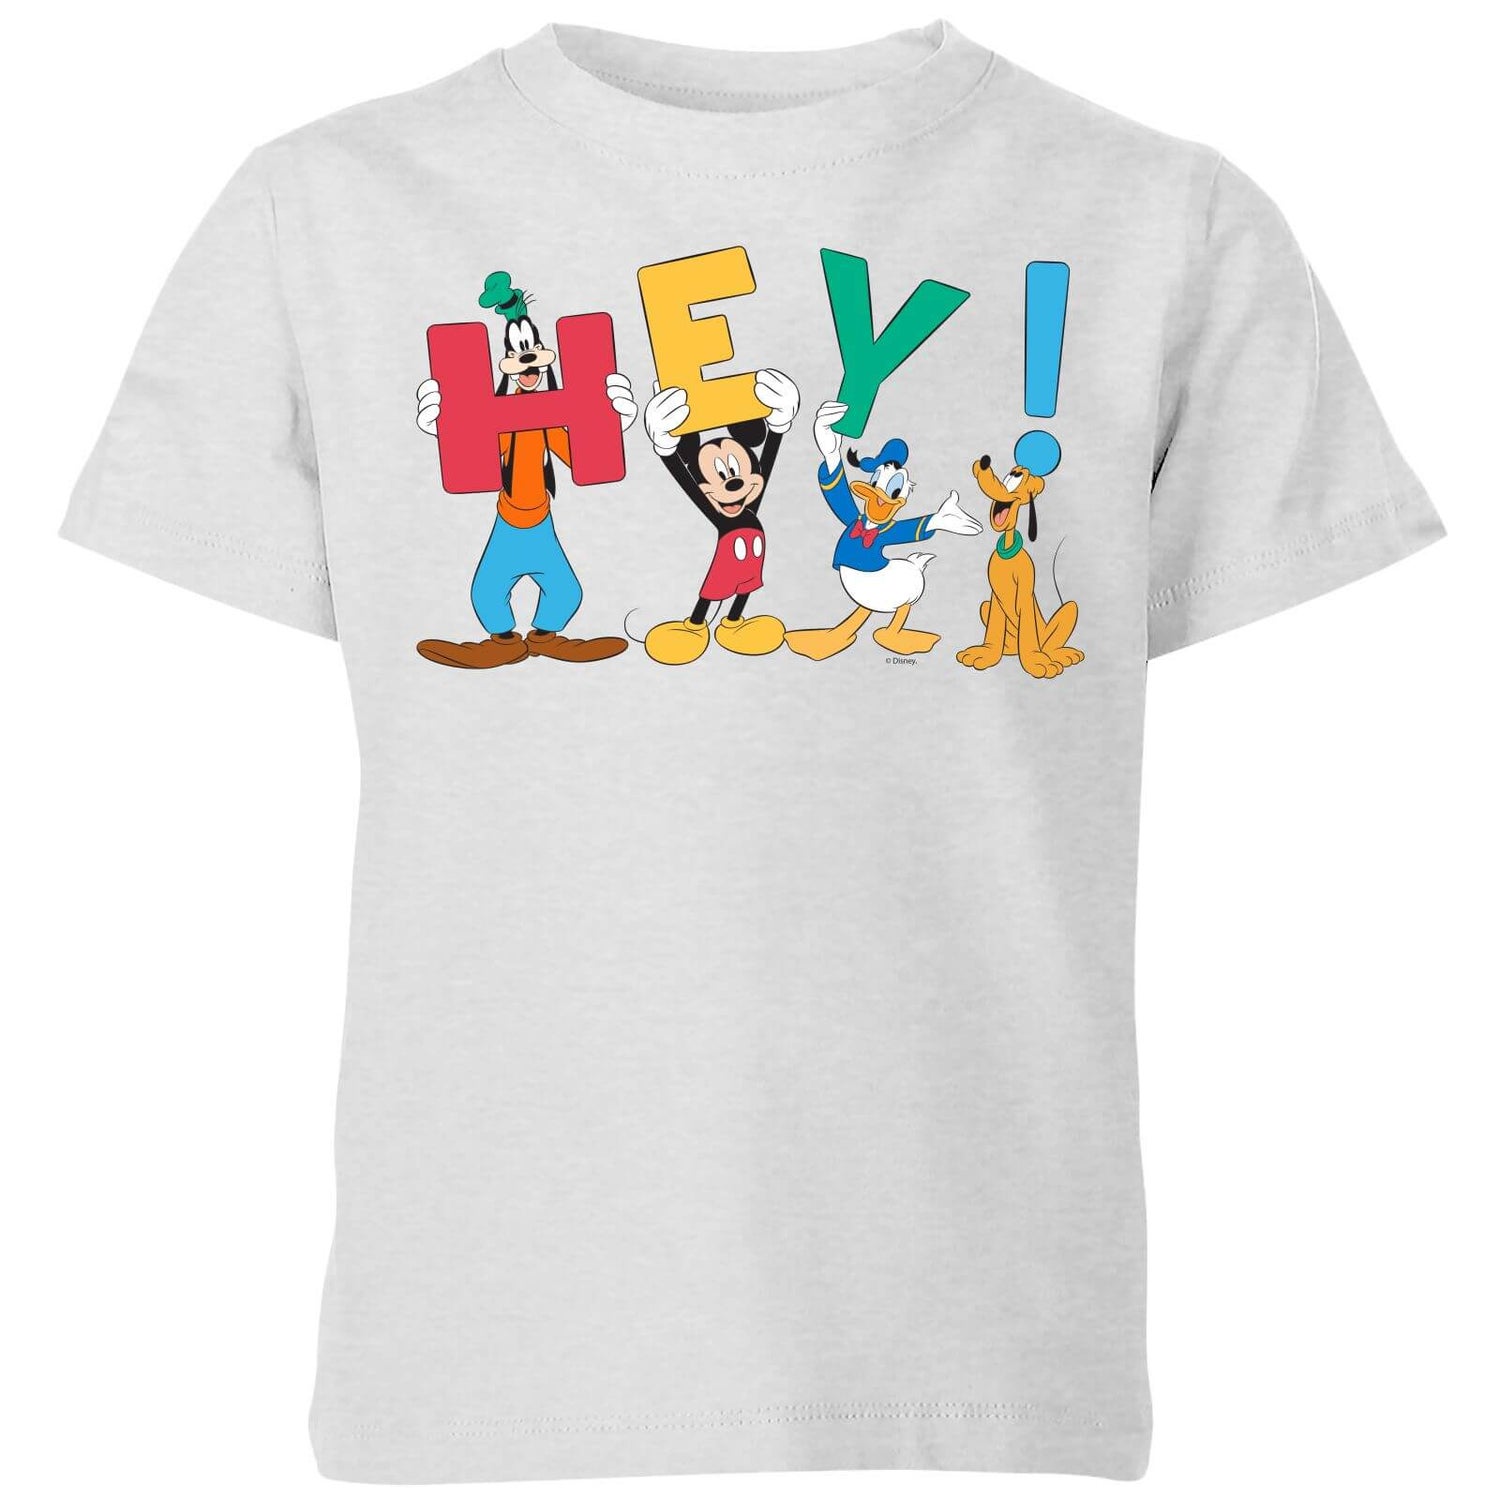 Disney Mickey Mouse Hey! Kids' T-Shirt - Grey